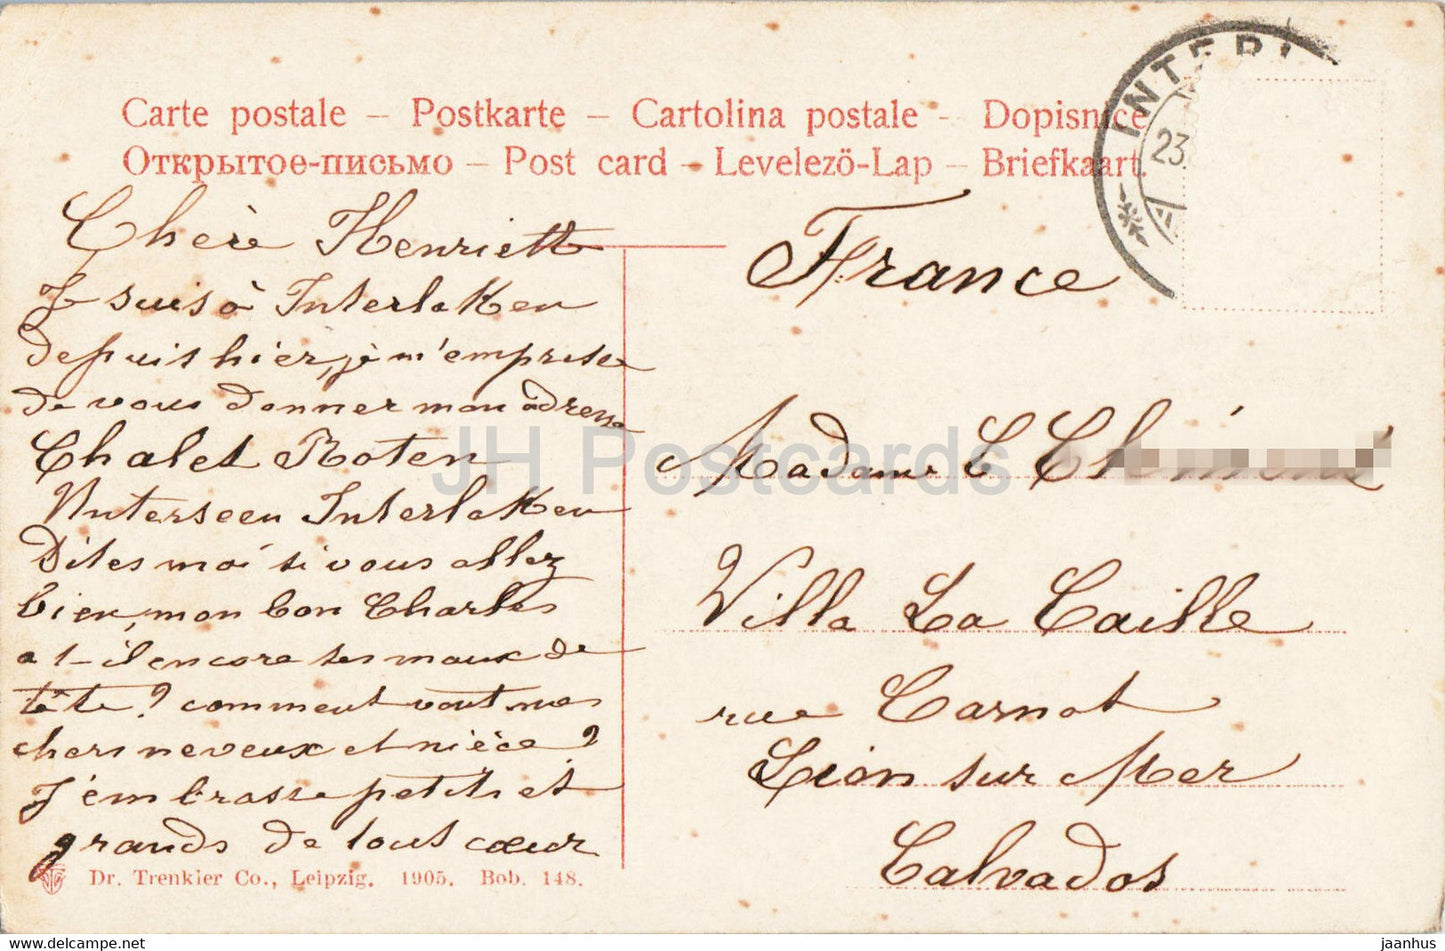 Interlaken - Marktgasse - old postcard - 1905 - Switzerland - used